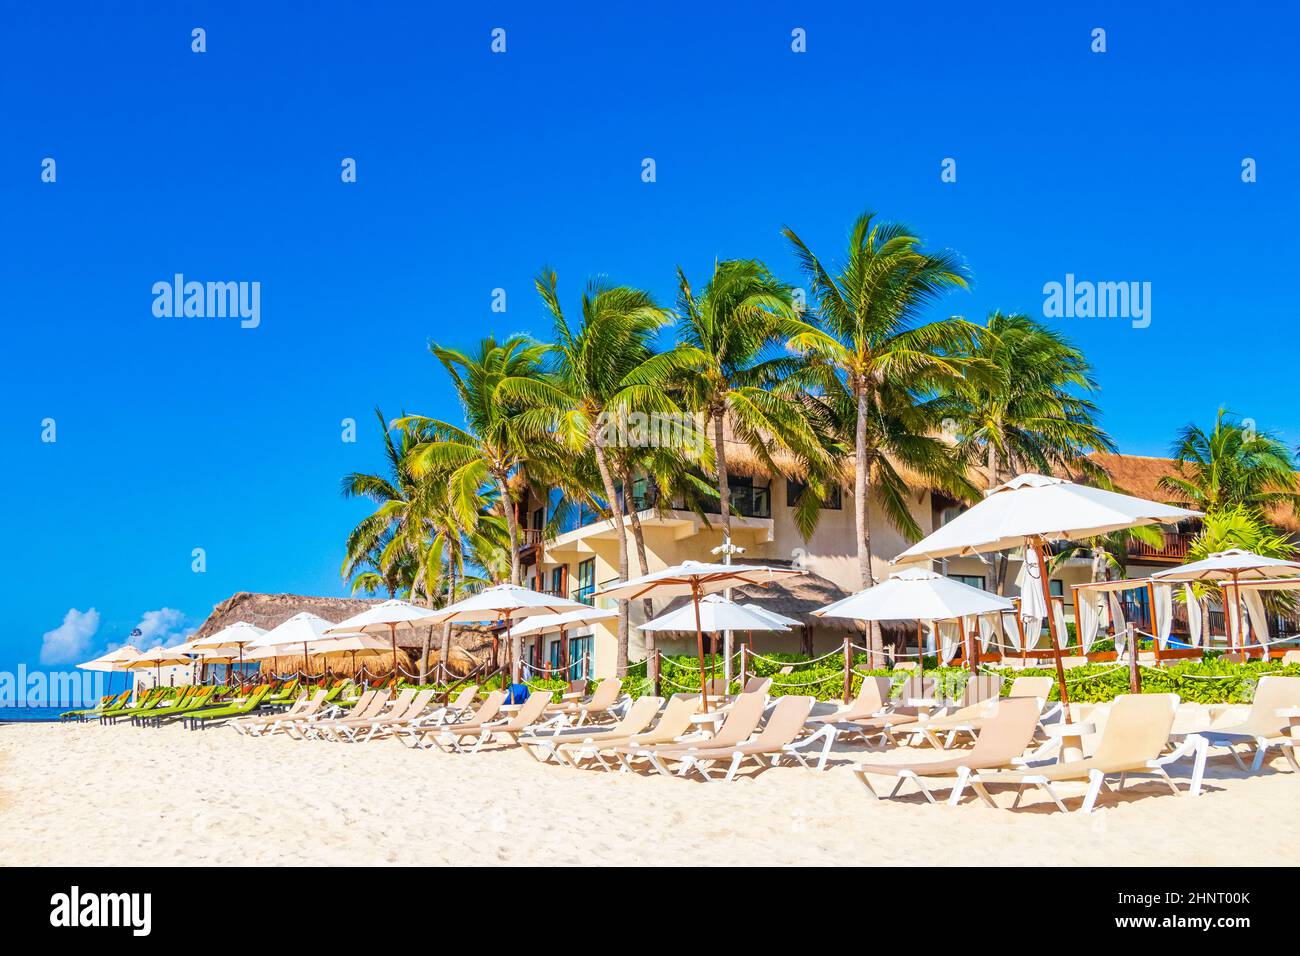 Palms parasols sun loungers beach resort Playa del Carmen Mexico. Stock Photo